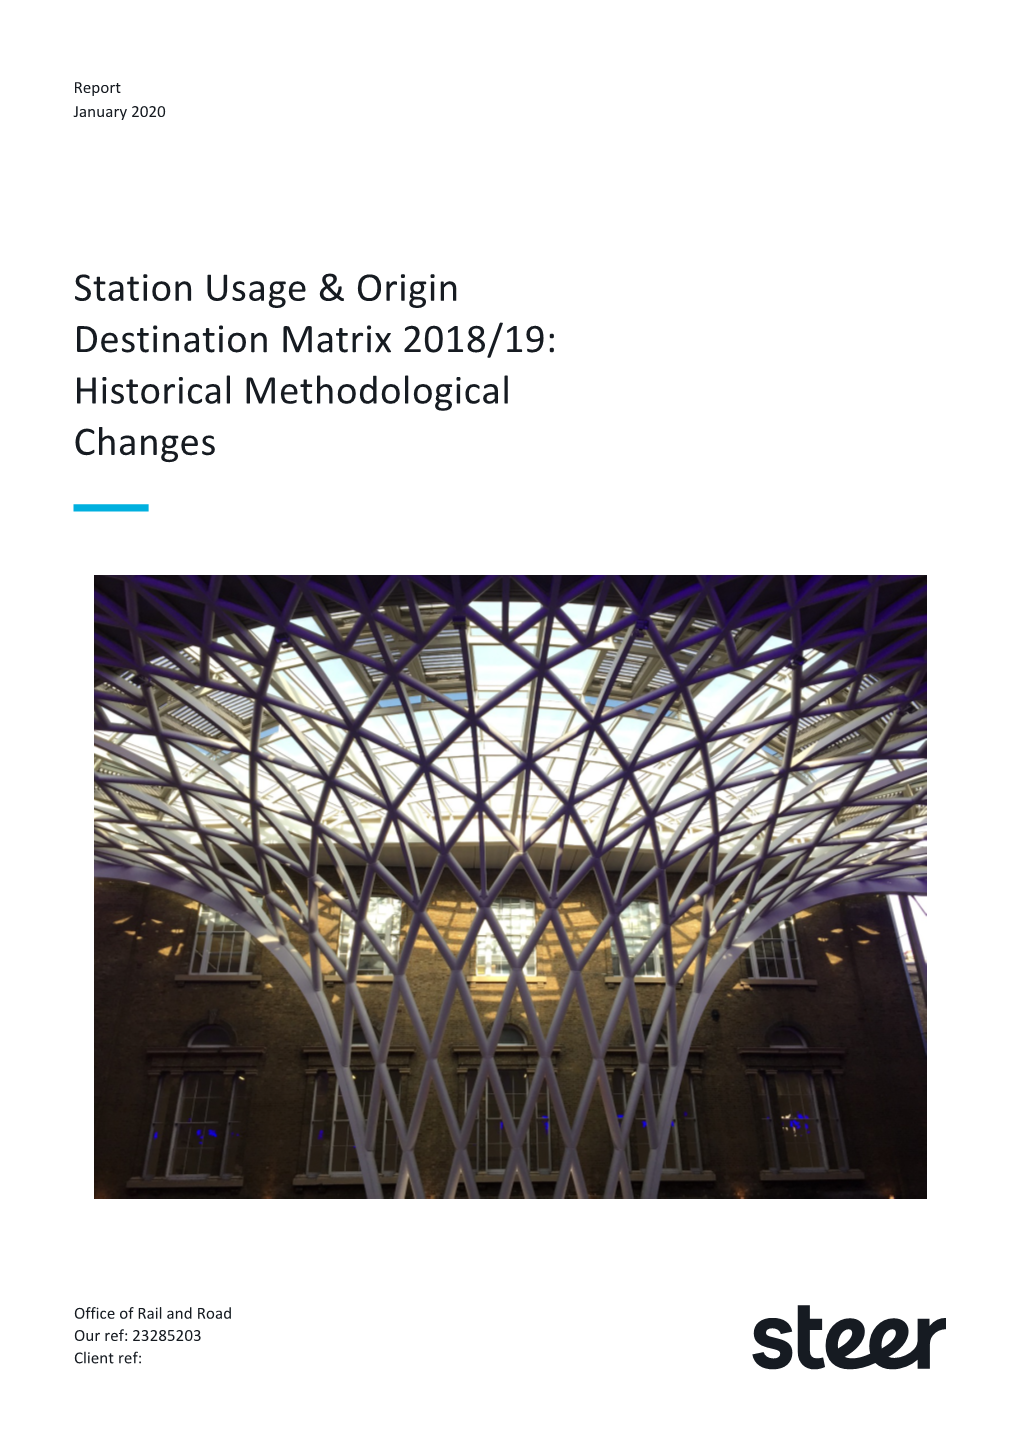 Station Usage & Origin Destination Matrix 2018/19